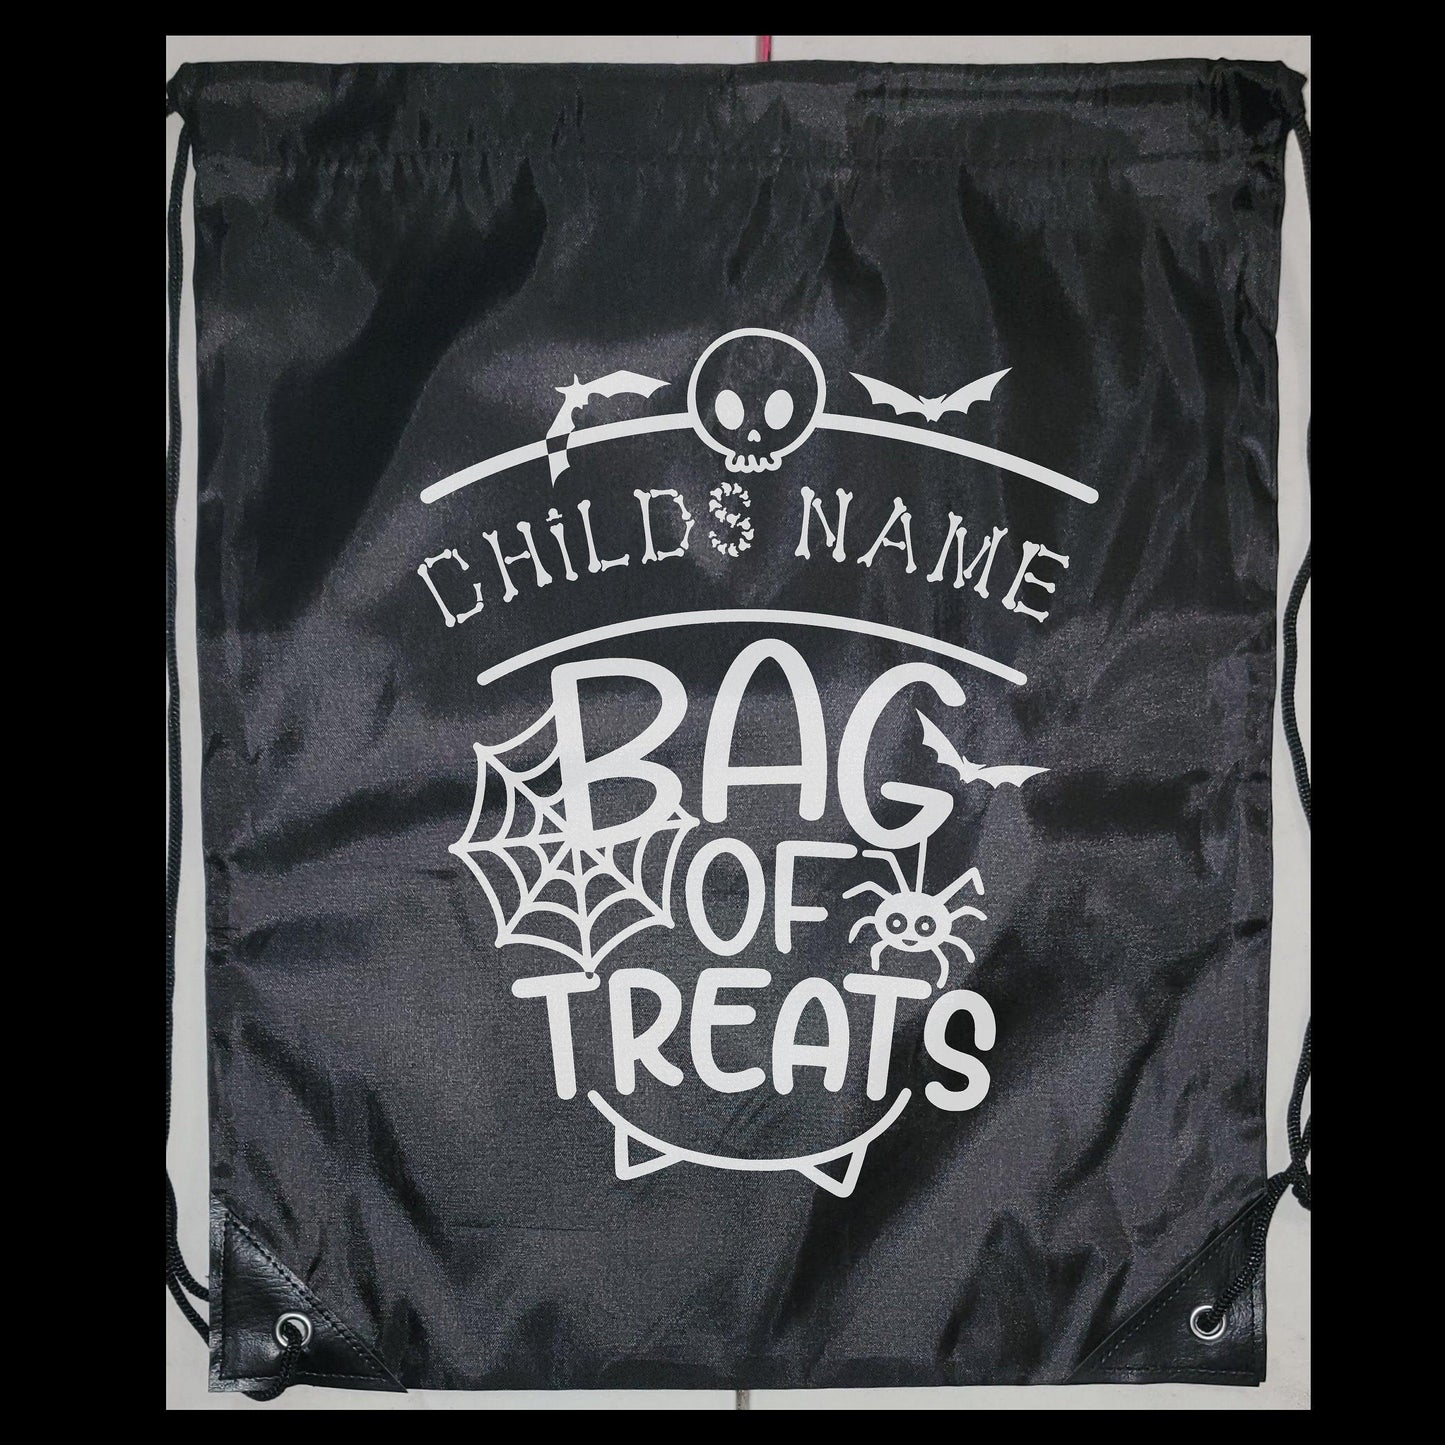 Personalized kids trick or treat bags, custom bag of treats drawstring Halloween bags FREE SHIPPING USA - Canadohta Custom Creations LLC